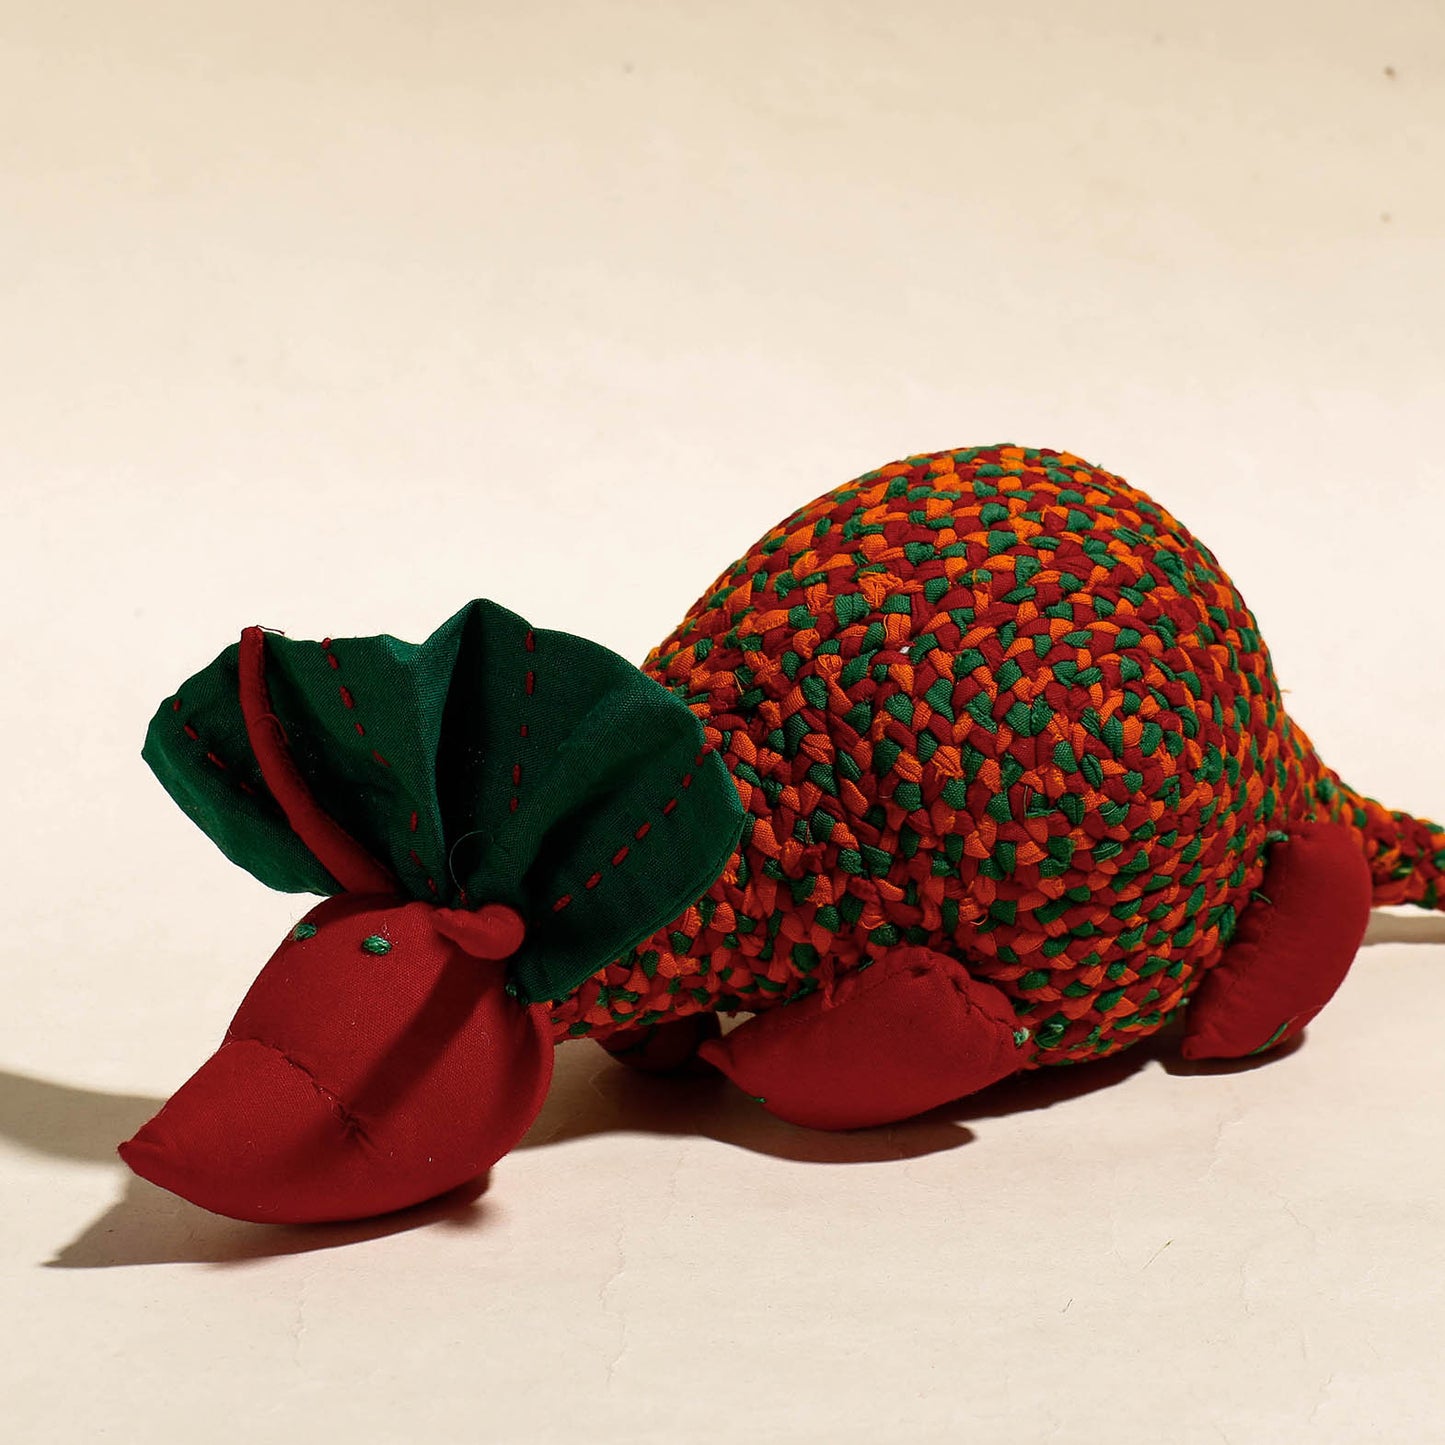 Dinosaur - Handmade Stuffed Toy by Dastkar Ranthambhore